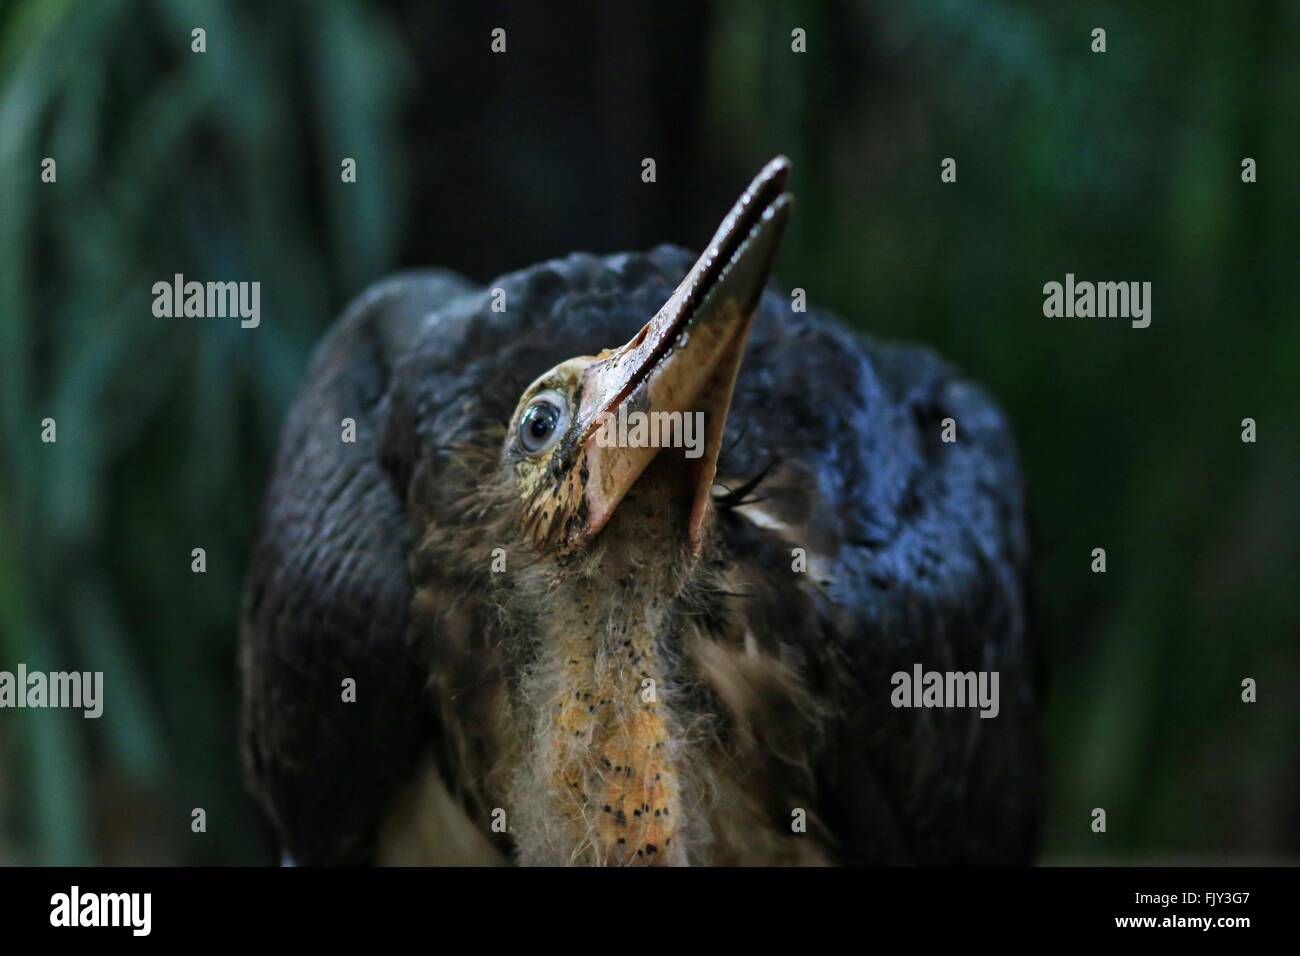 Long beak animal hi-res stock photography and images - Alamy